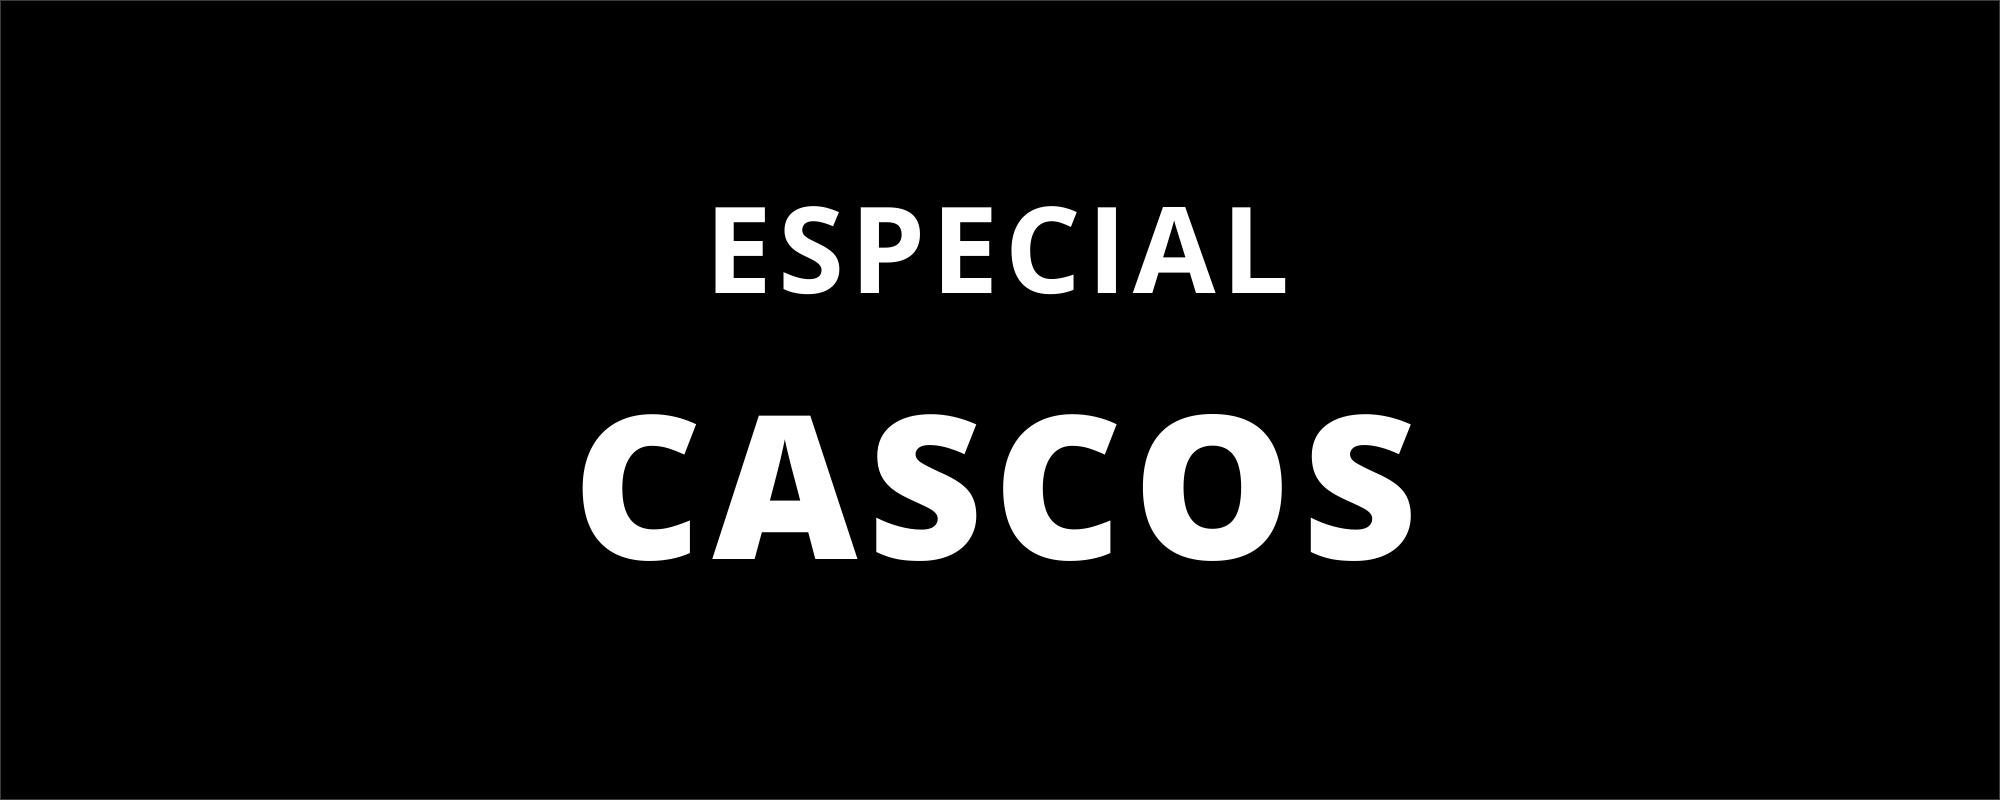 ESPECIAL CASCOS